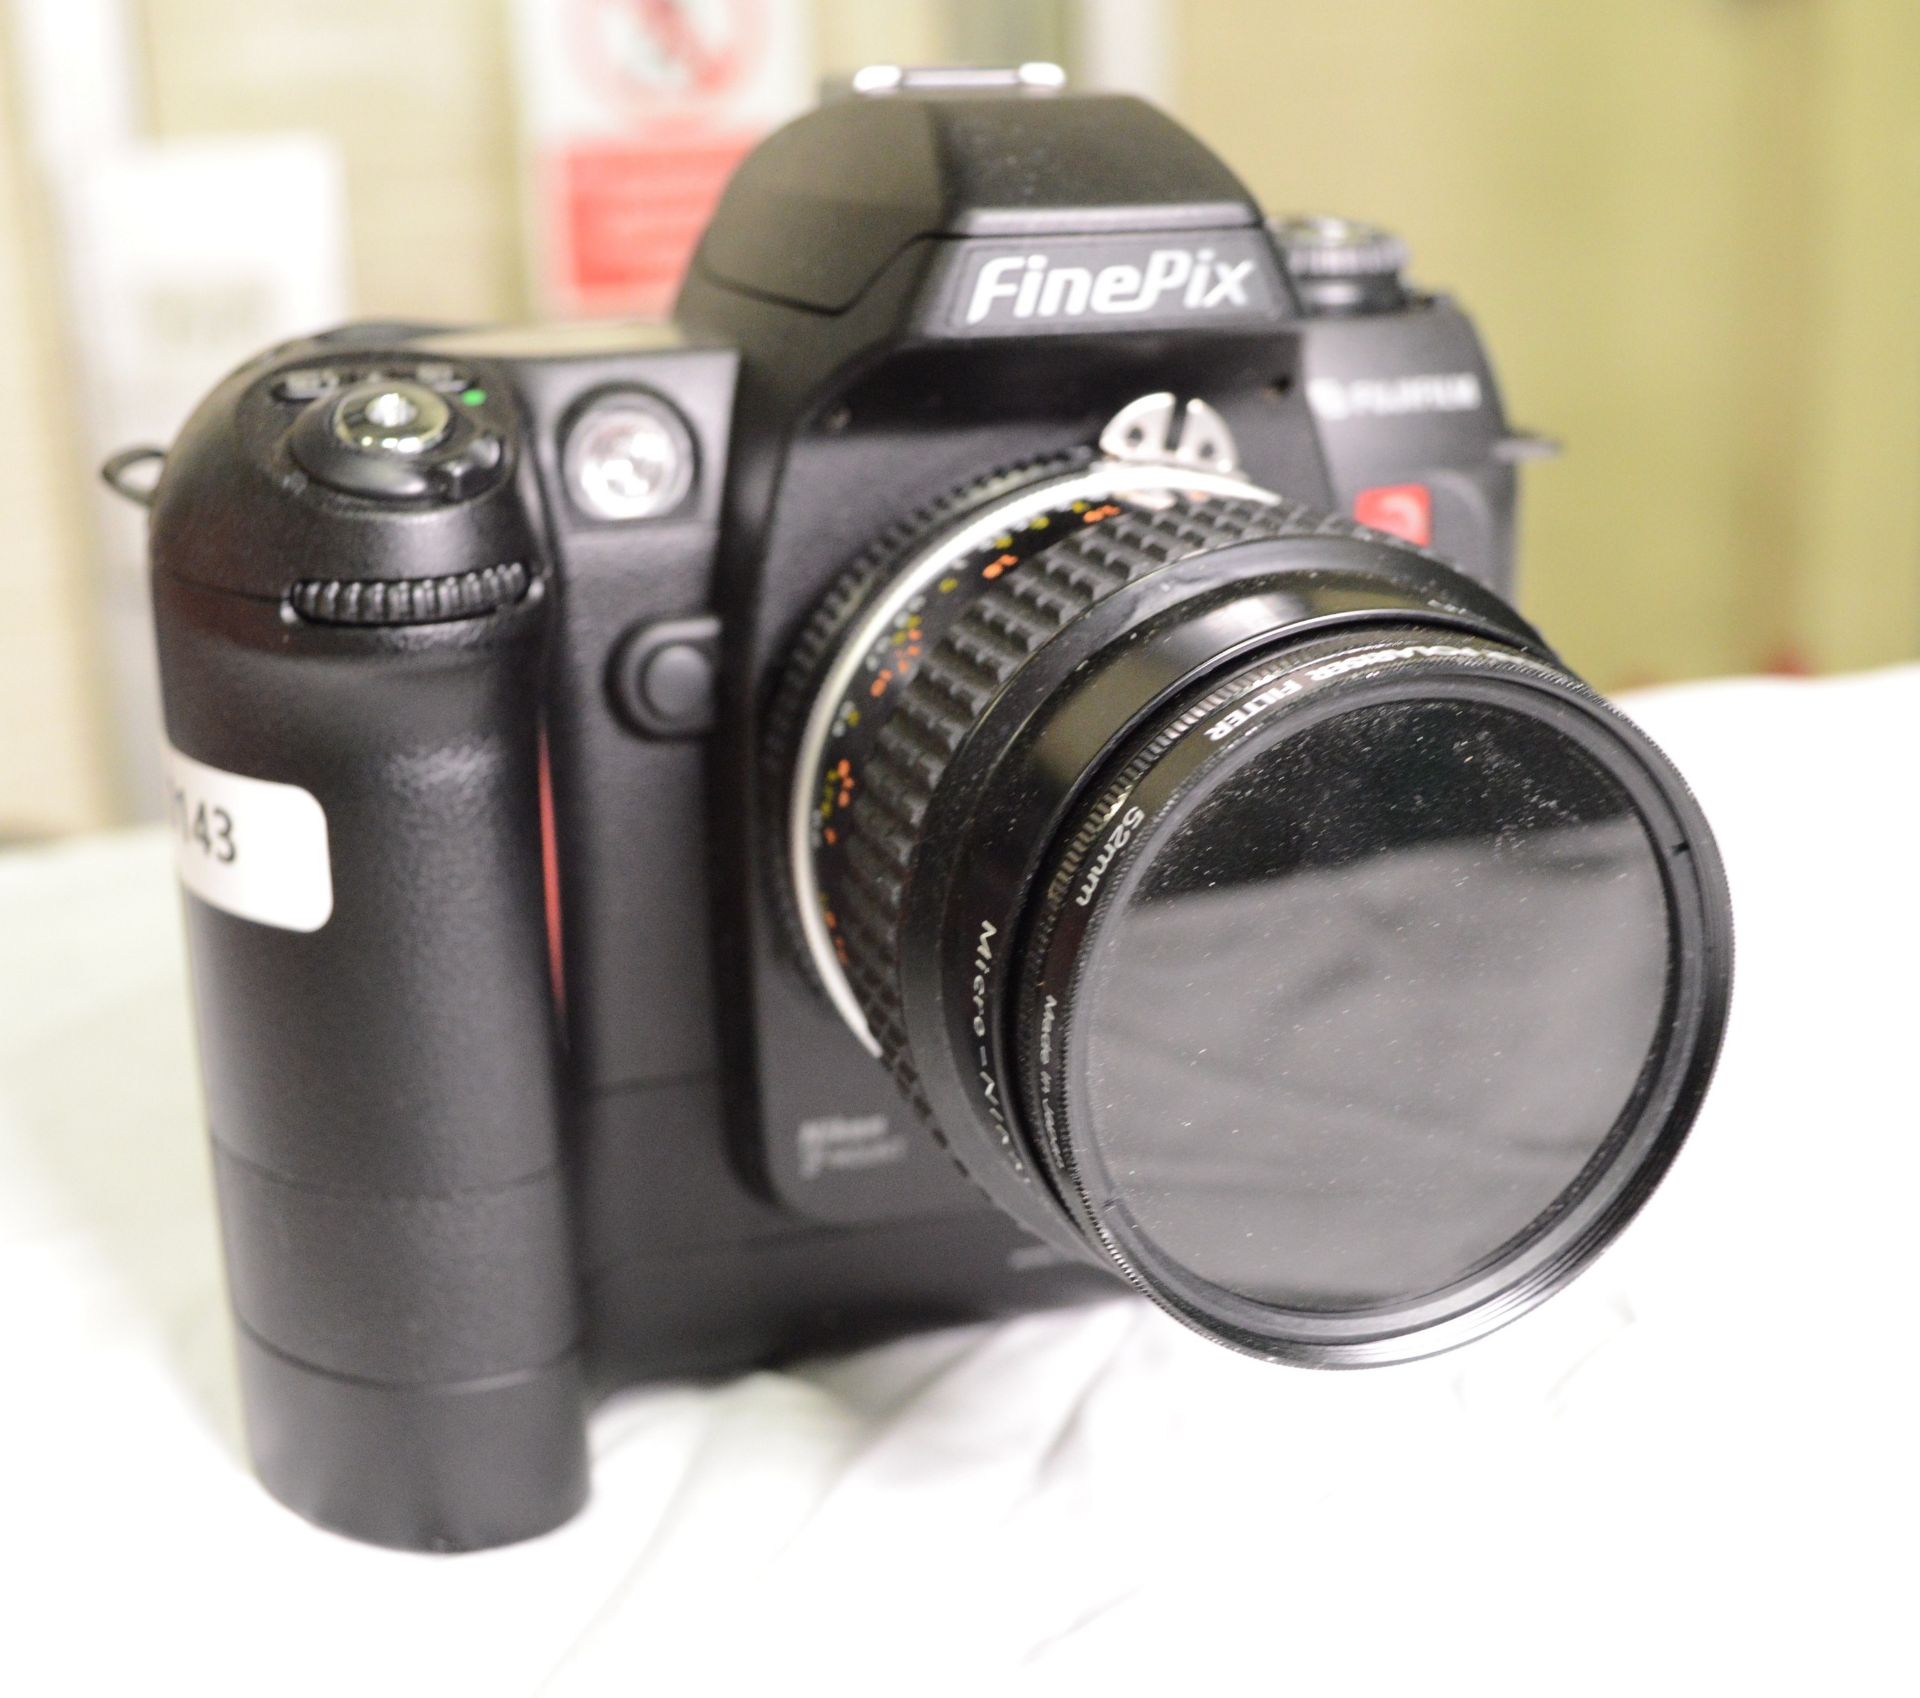 Fujifilm FinePix S2 Pro Digital Camera & Nikkor 55mm Lens. - Image 2 of 6